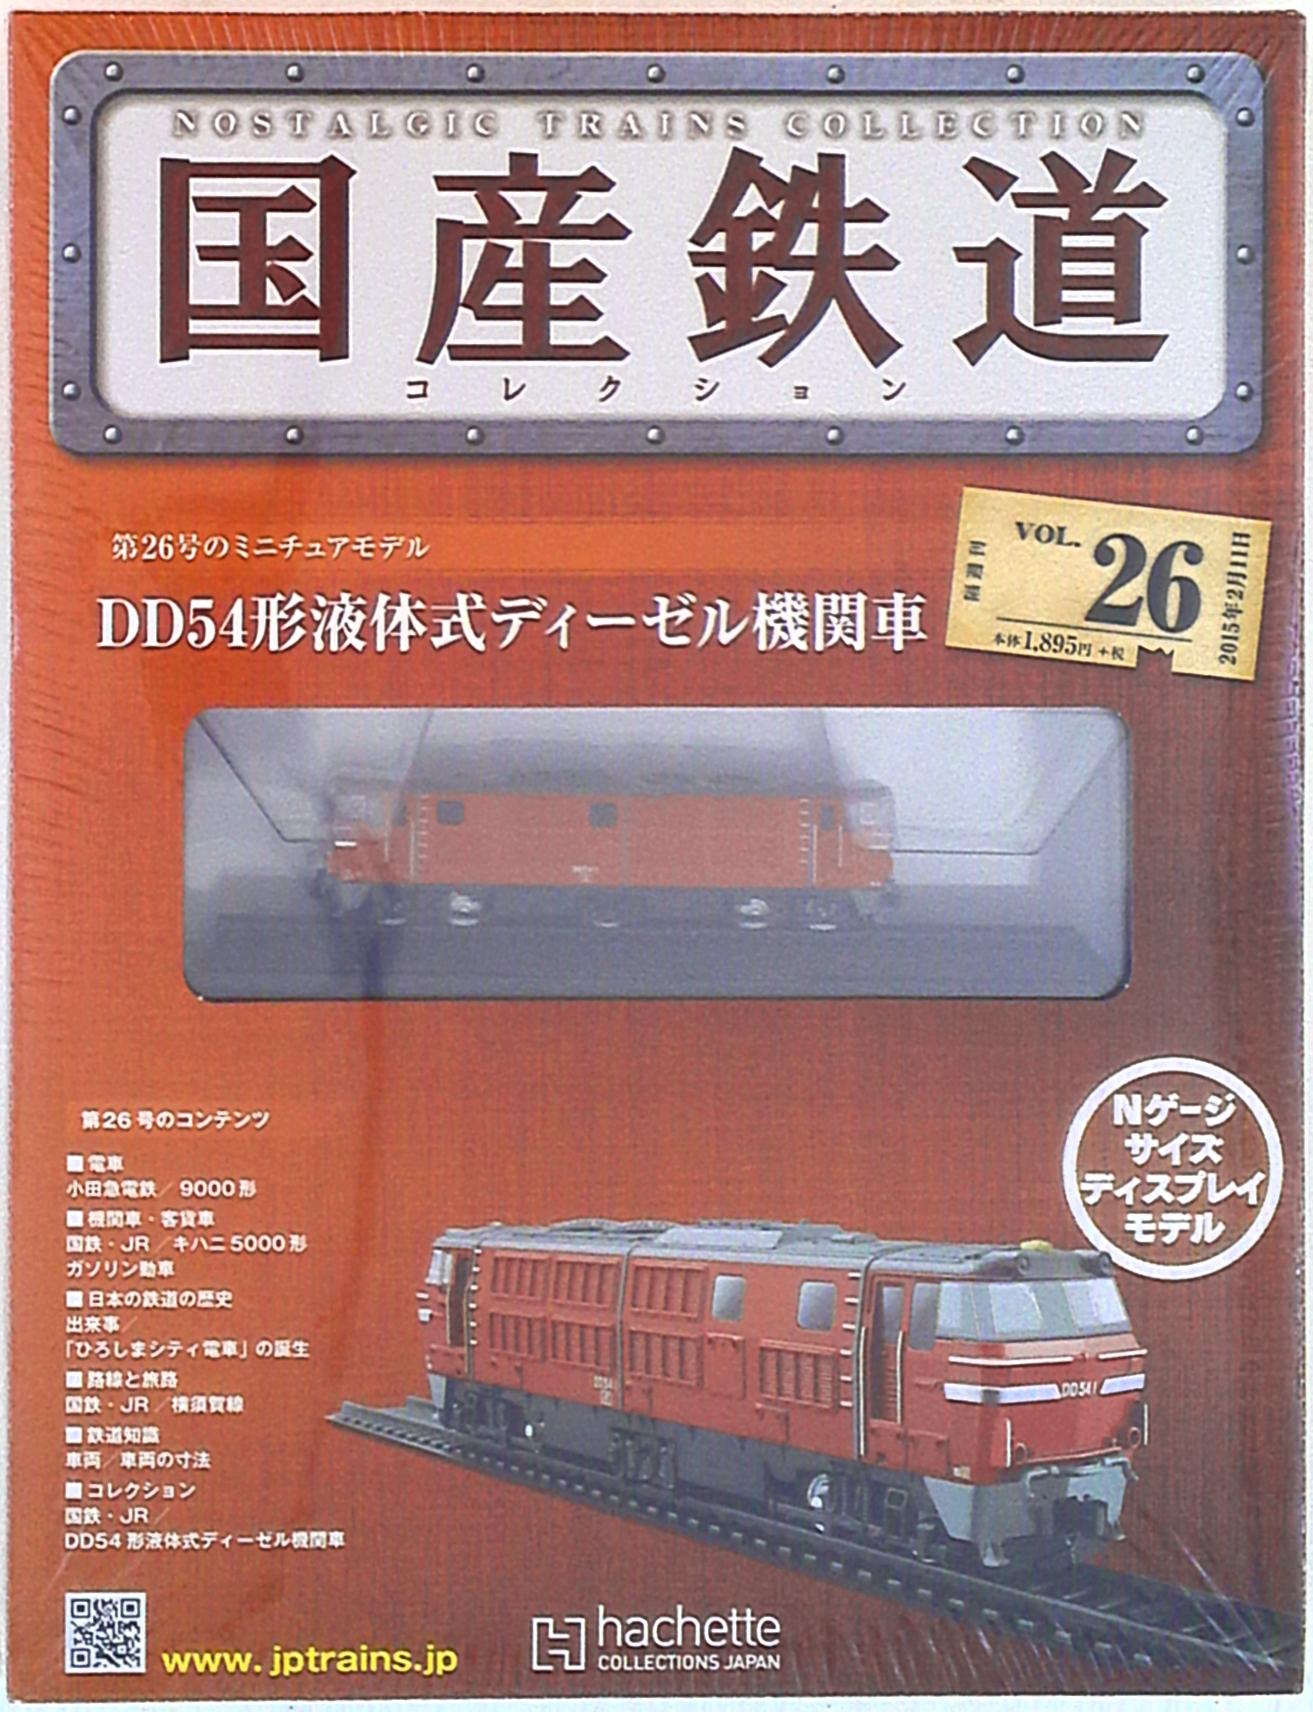 The Hachette コレクションズ Domestic Railroad Collection The